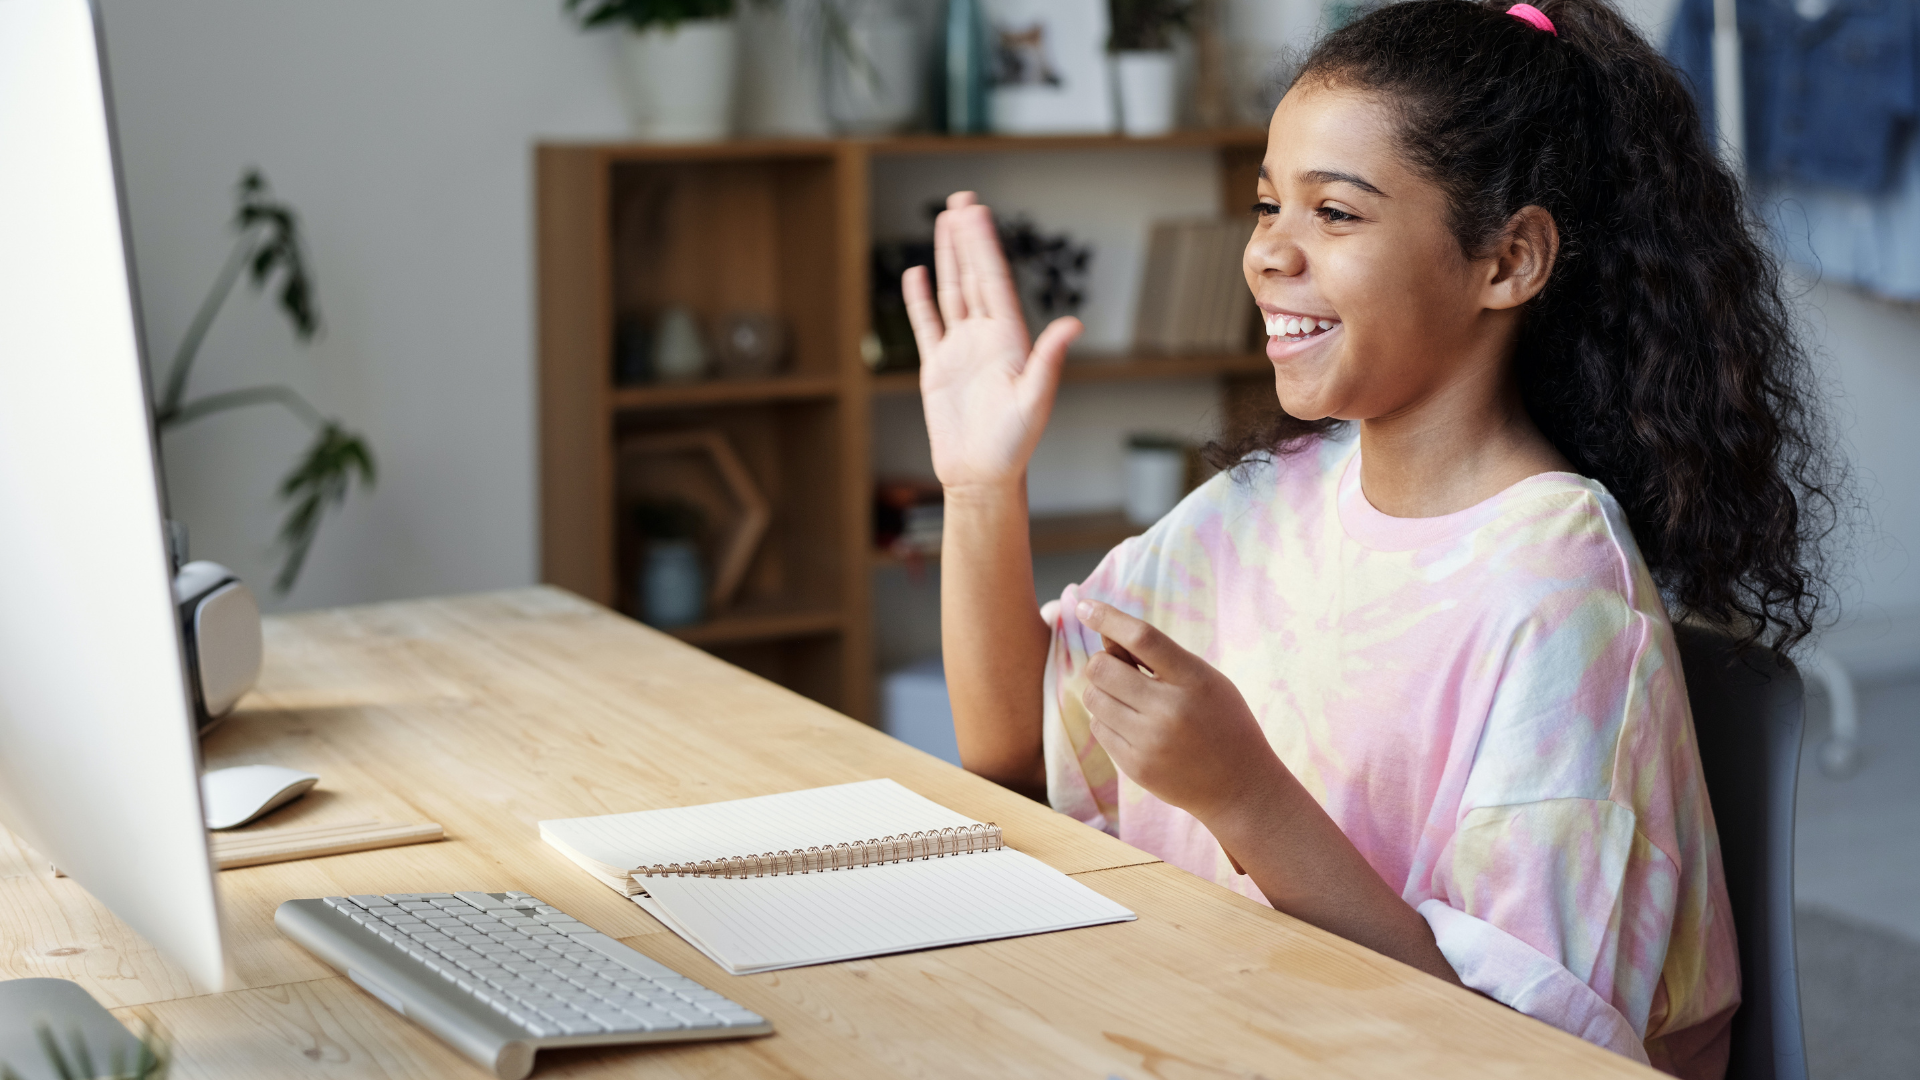 girl learning to code through online tutoring